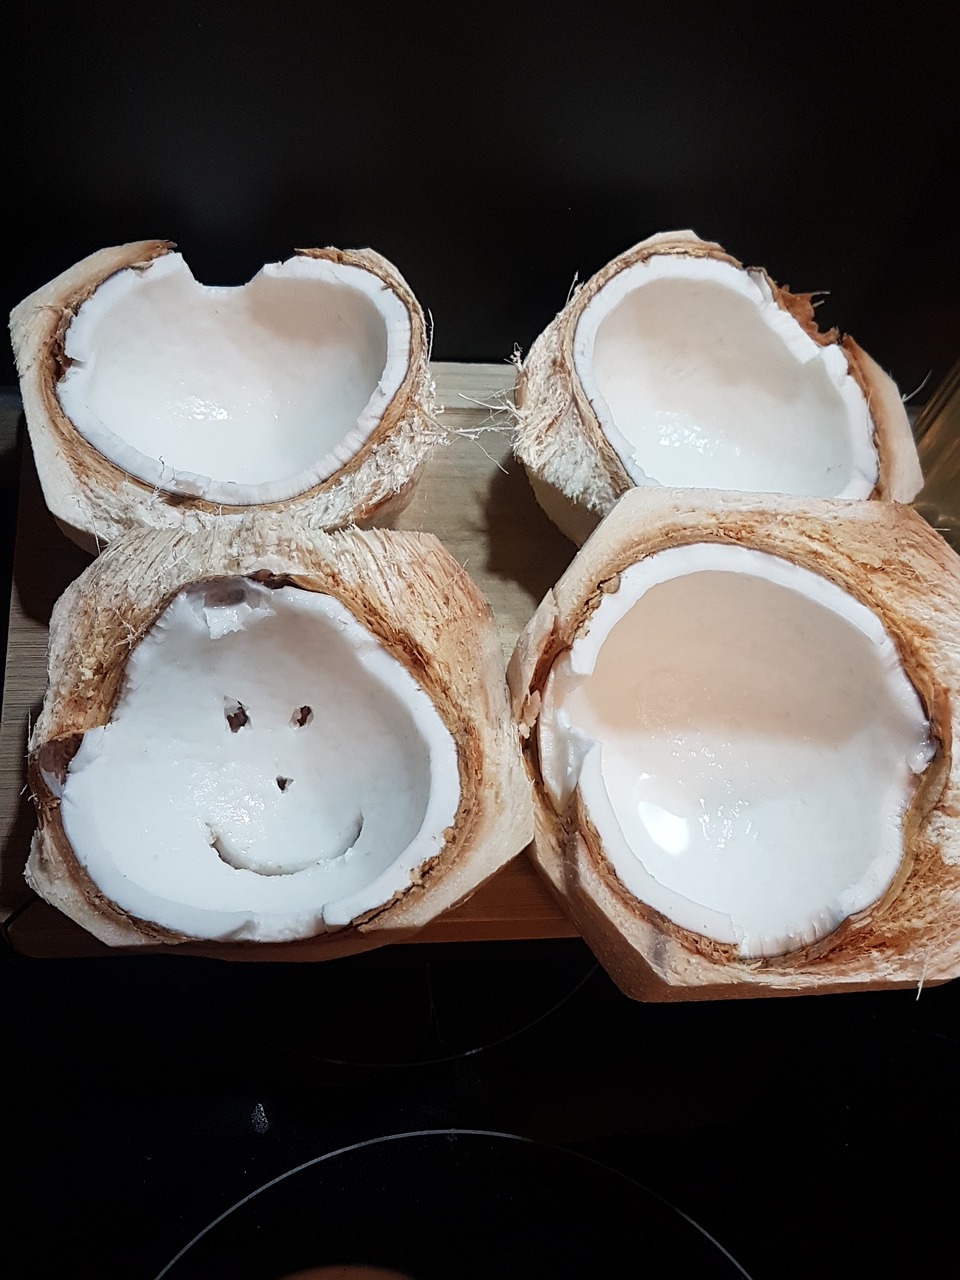 coconut rawvegan food background free photo